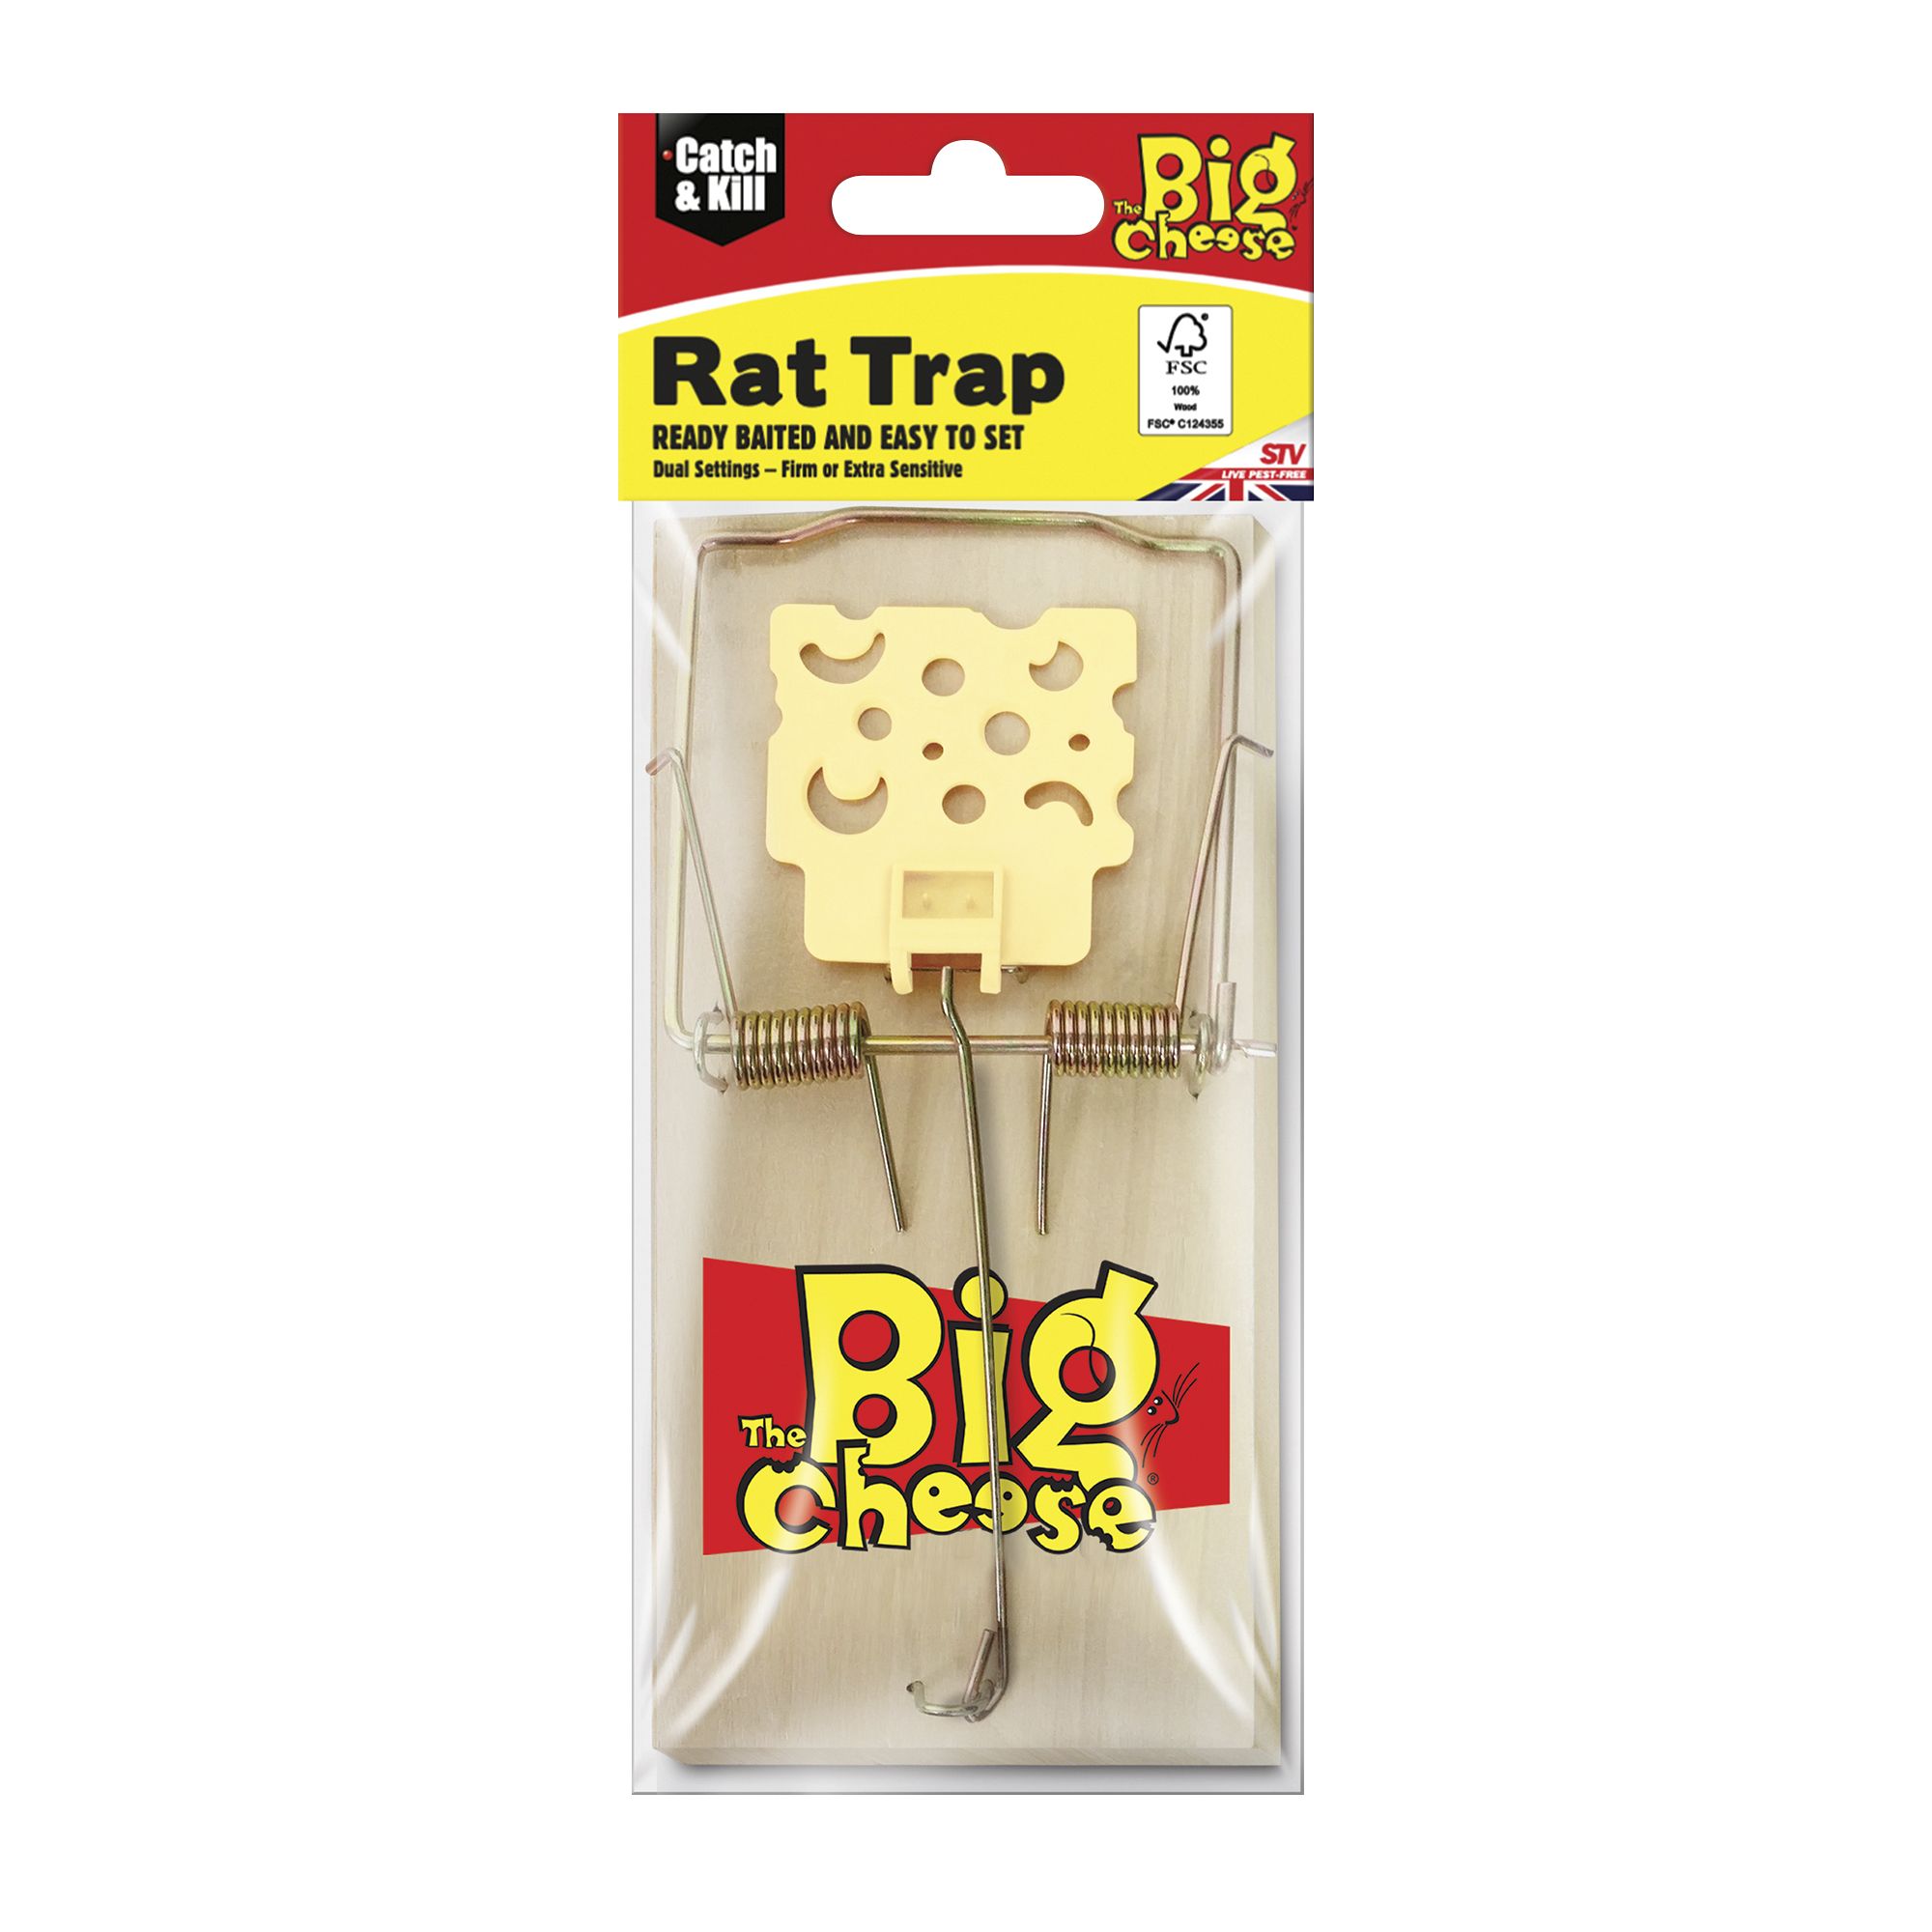 Big Cheese Electronic Rat Killer STV721 — Dalton Engineering